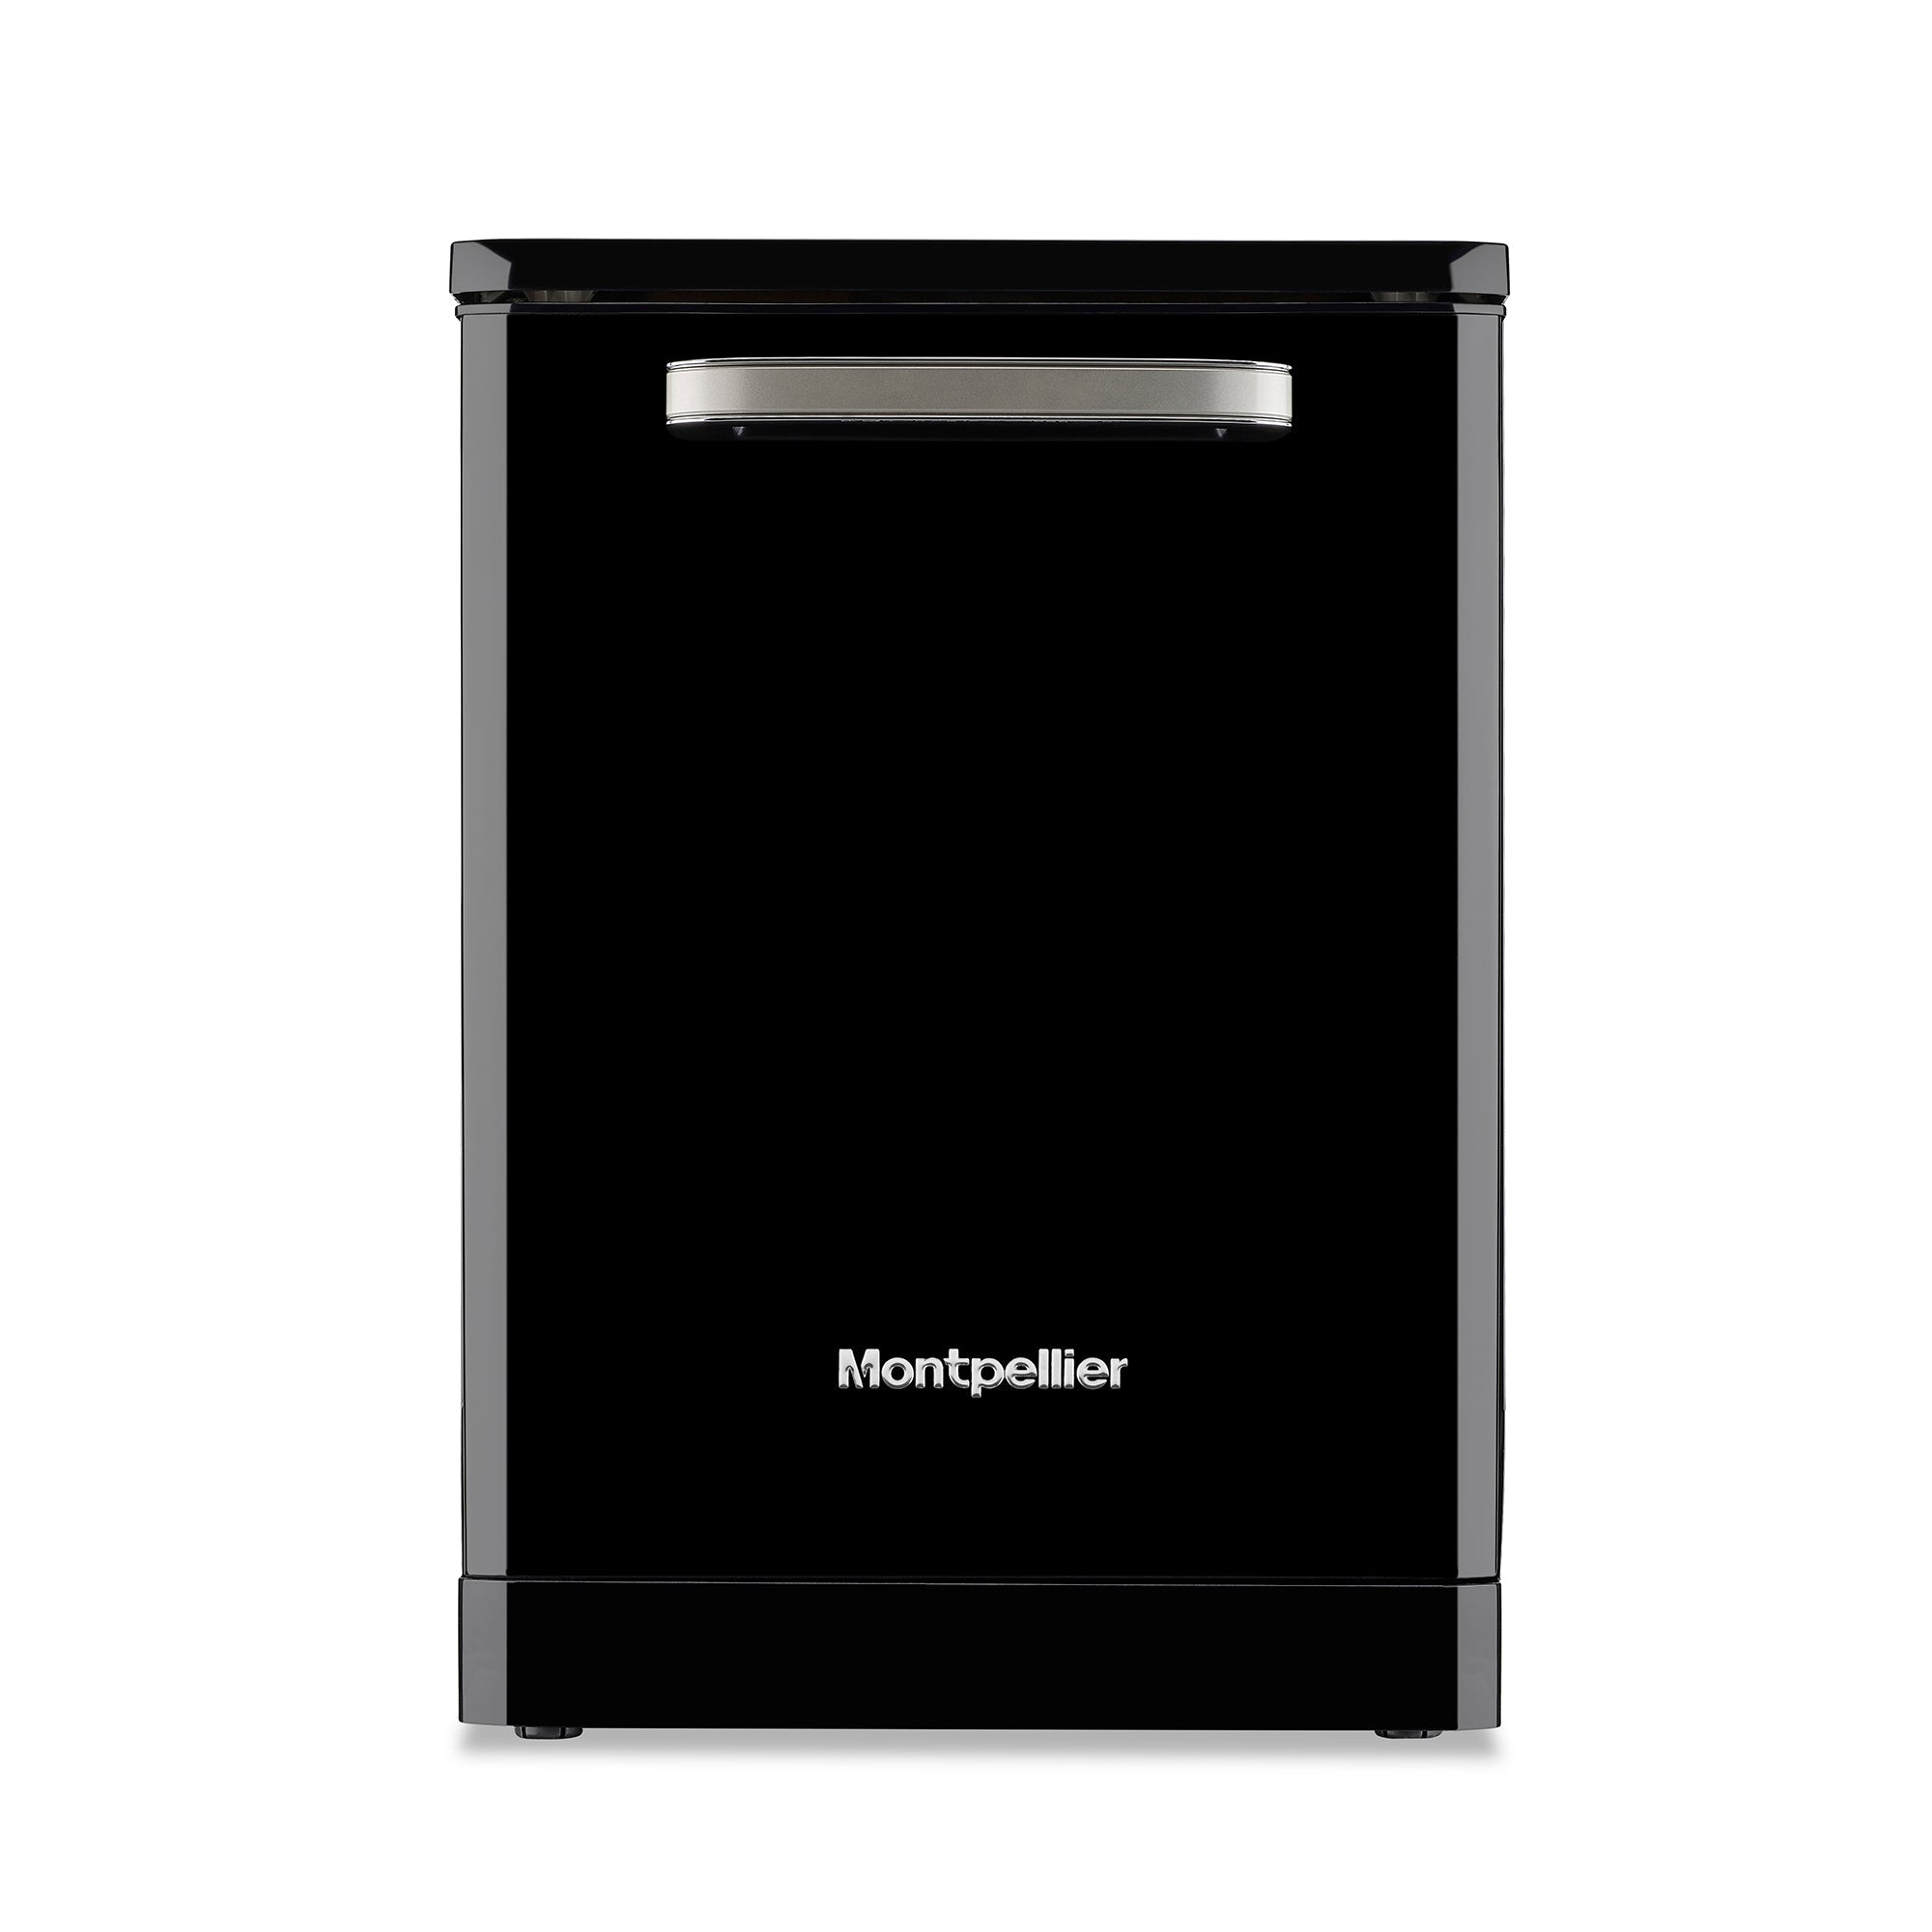 Montpellier MAB1353K Freestanding Dishwasher 60cm in Black GRADE B